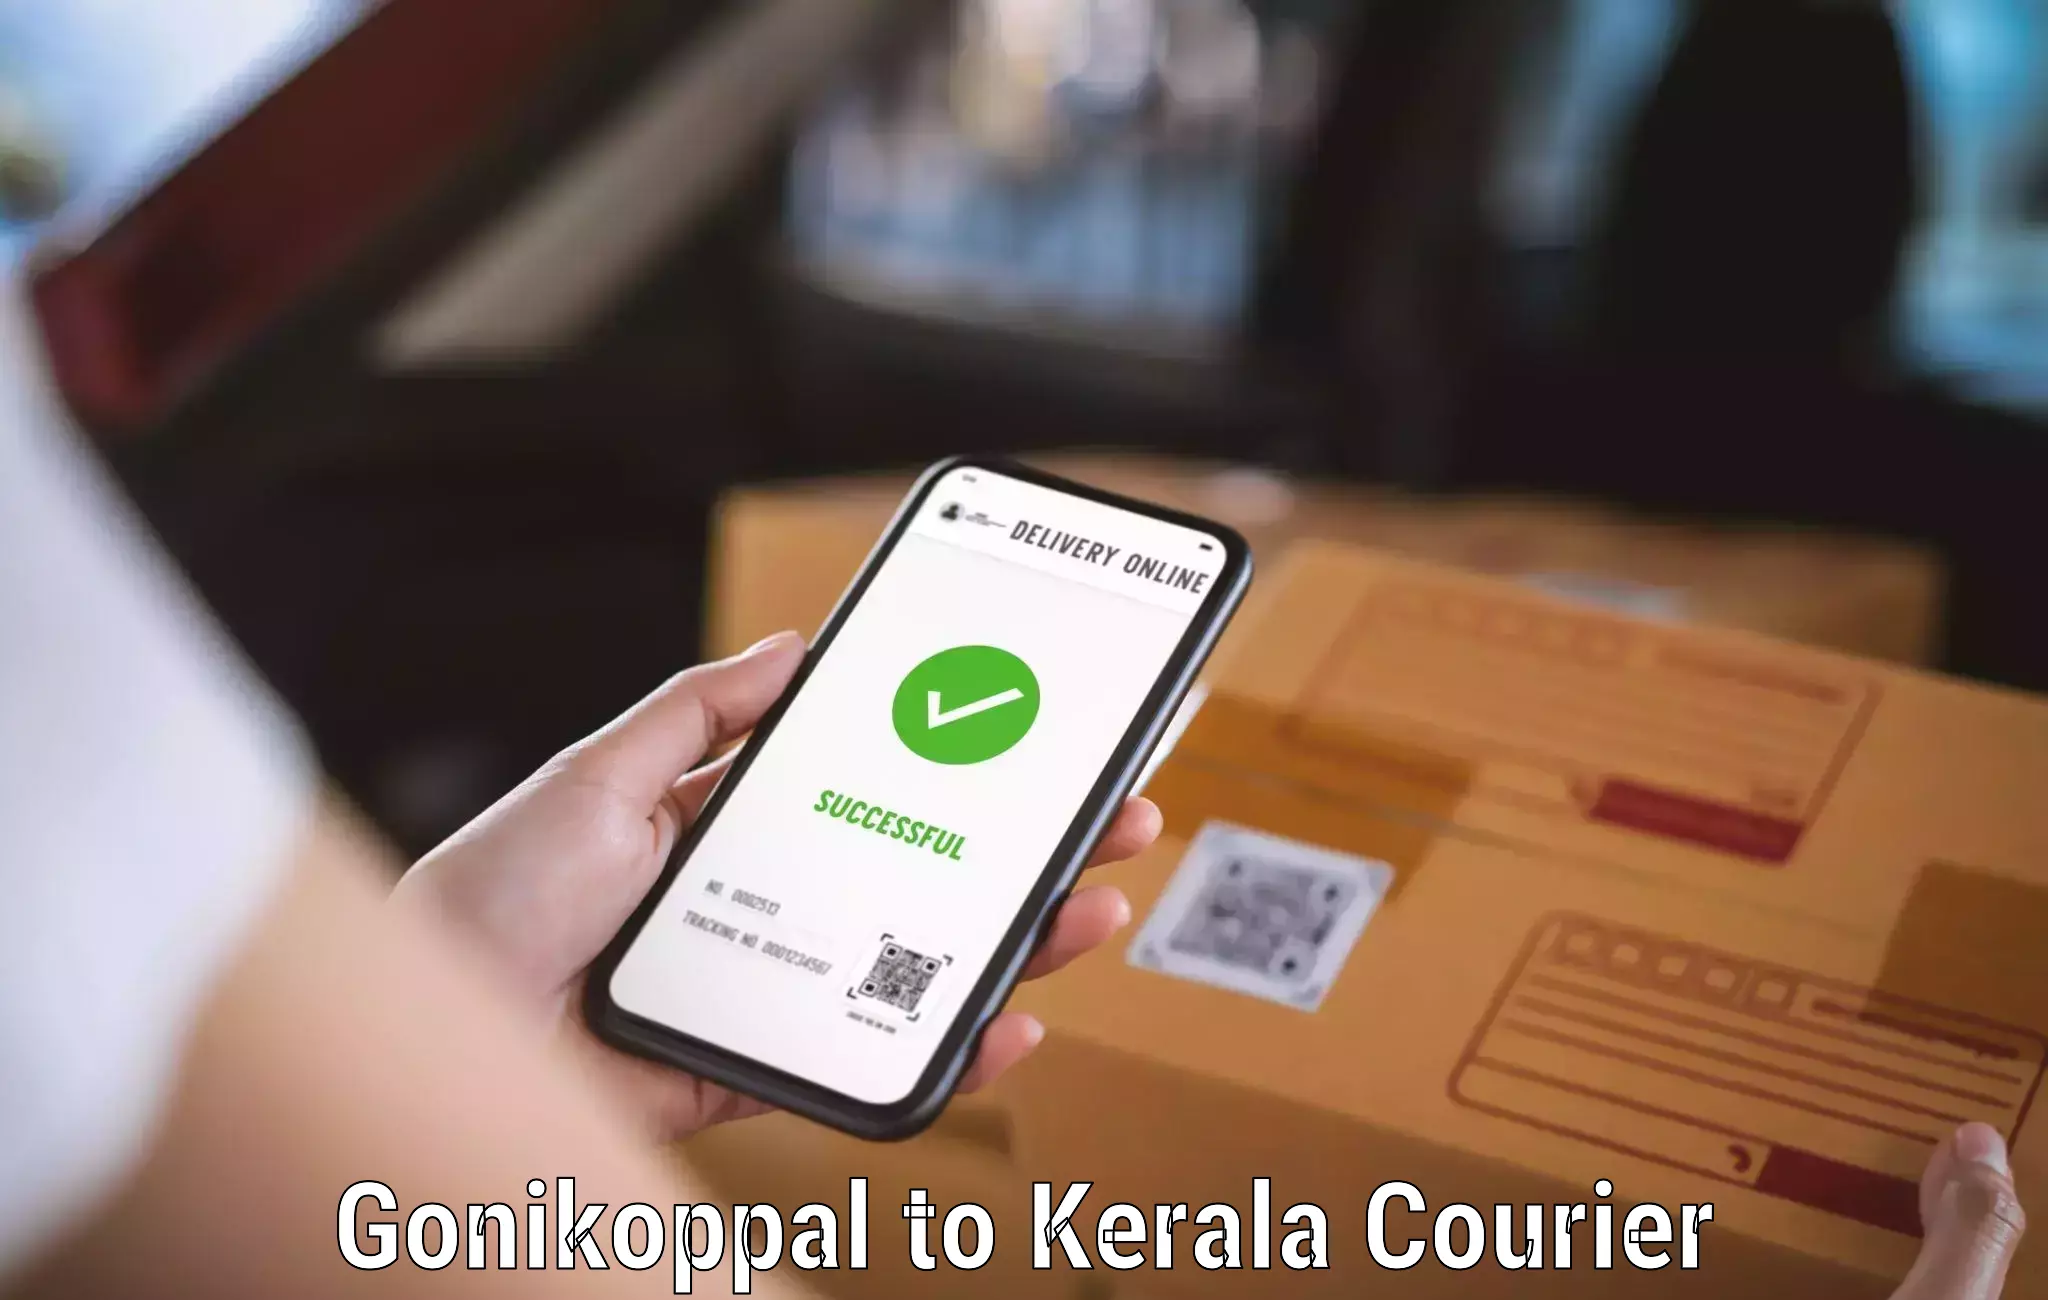 Courier service partnerships Gonikoppal to Kazhakkoottam